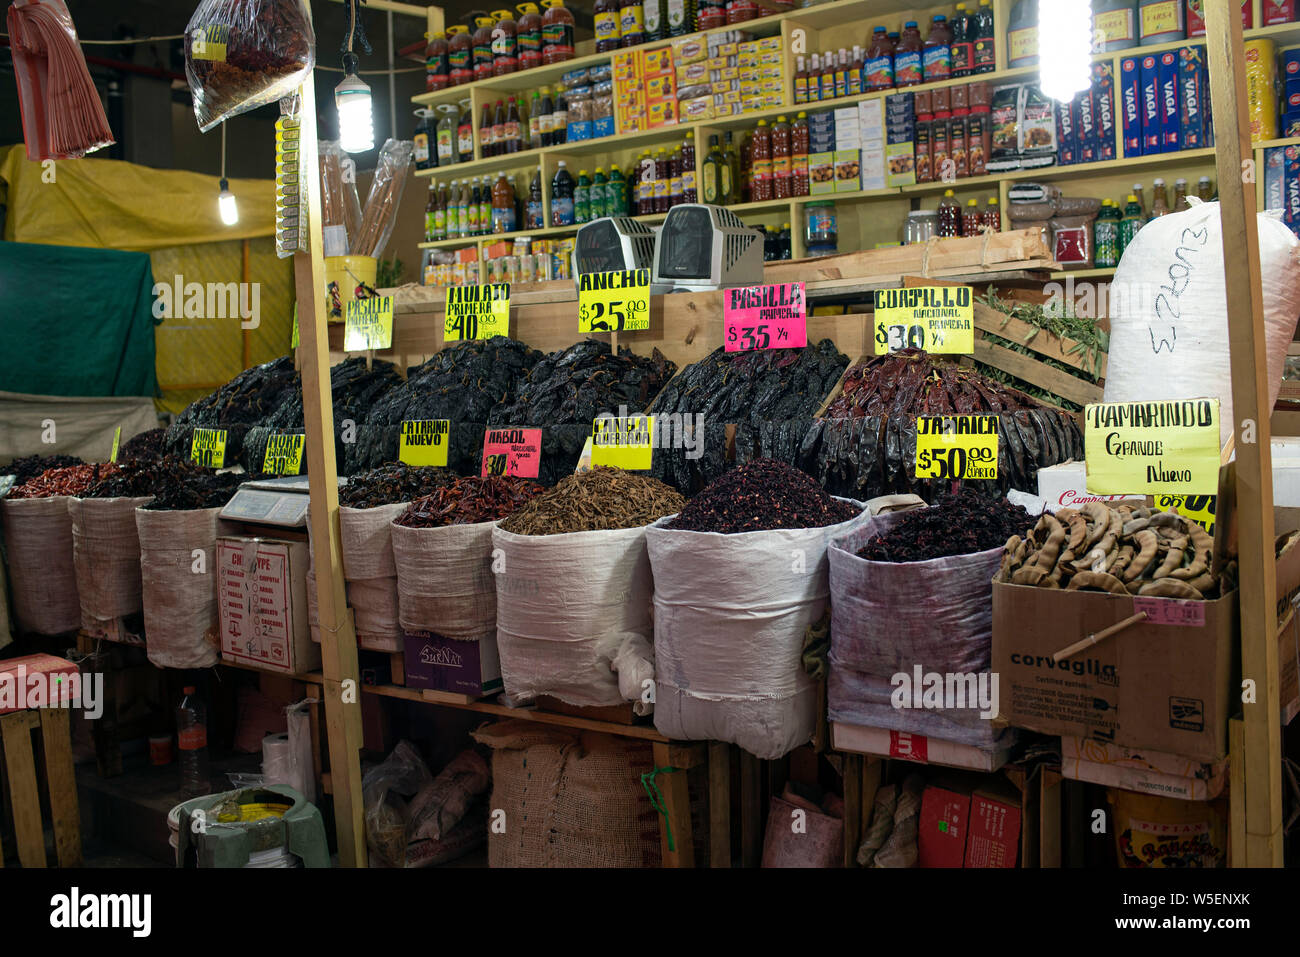 Market stall with labelled sacks of local products for sale in La Merced (Mercado De La Merced) in Mexico City, CDMX, Mexico. Jun 2019 Stock Photo